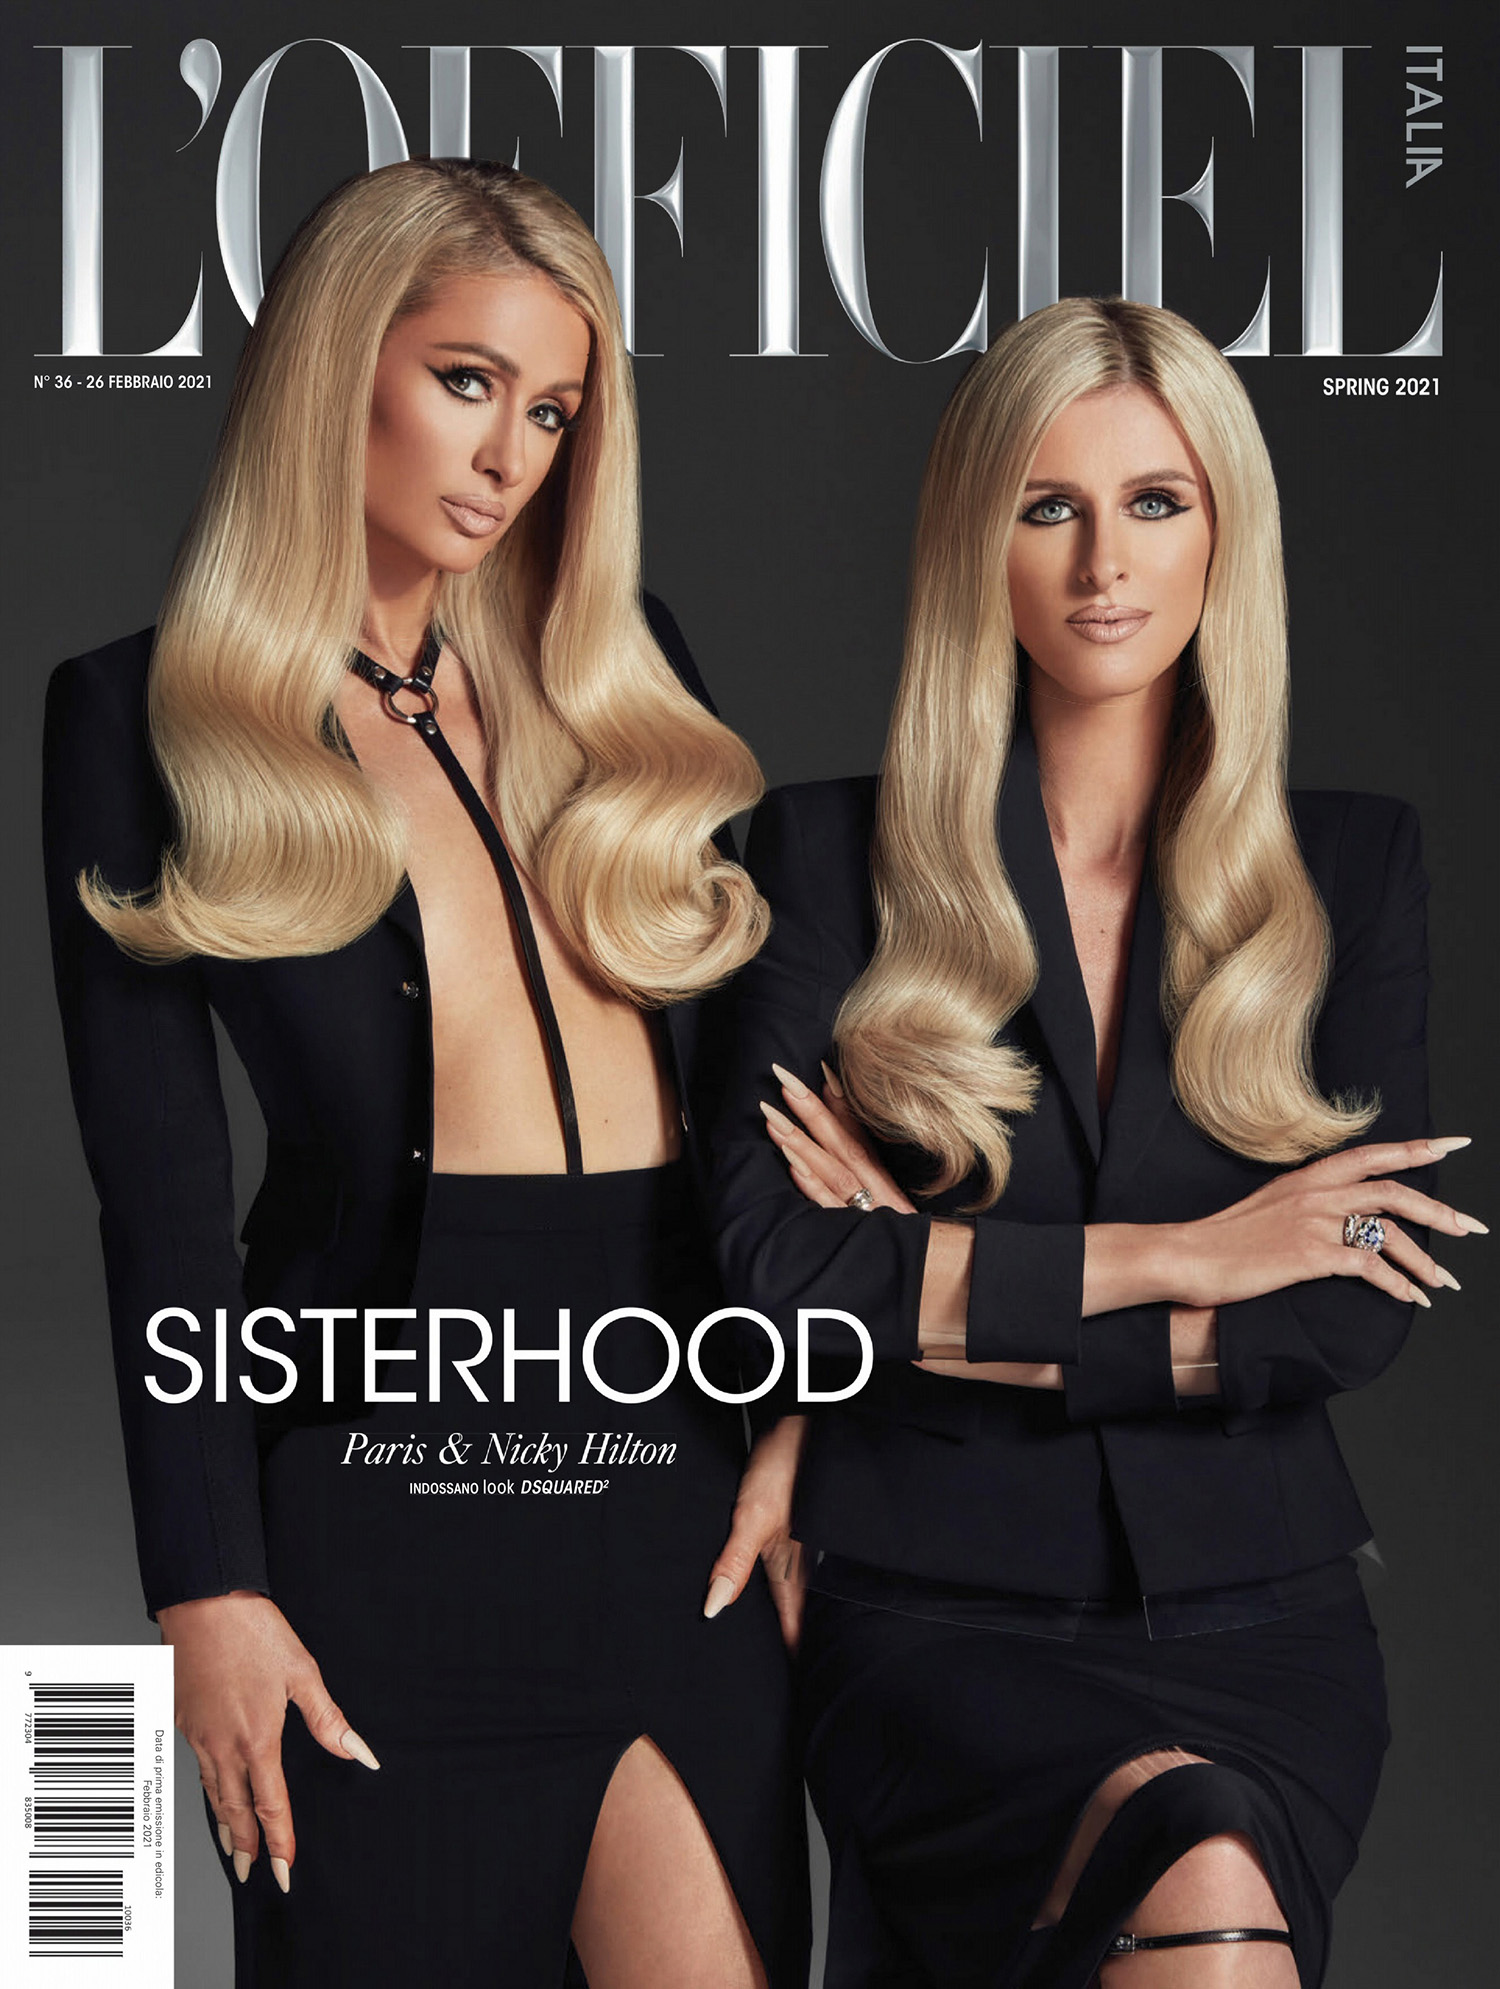 Paris Hilton & Nicky Hilton cover L’Officiel Italia Issue 36 by Vijat Mohindra